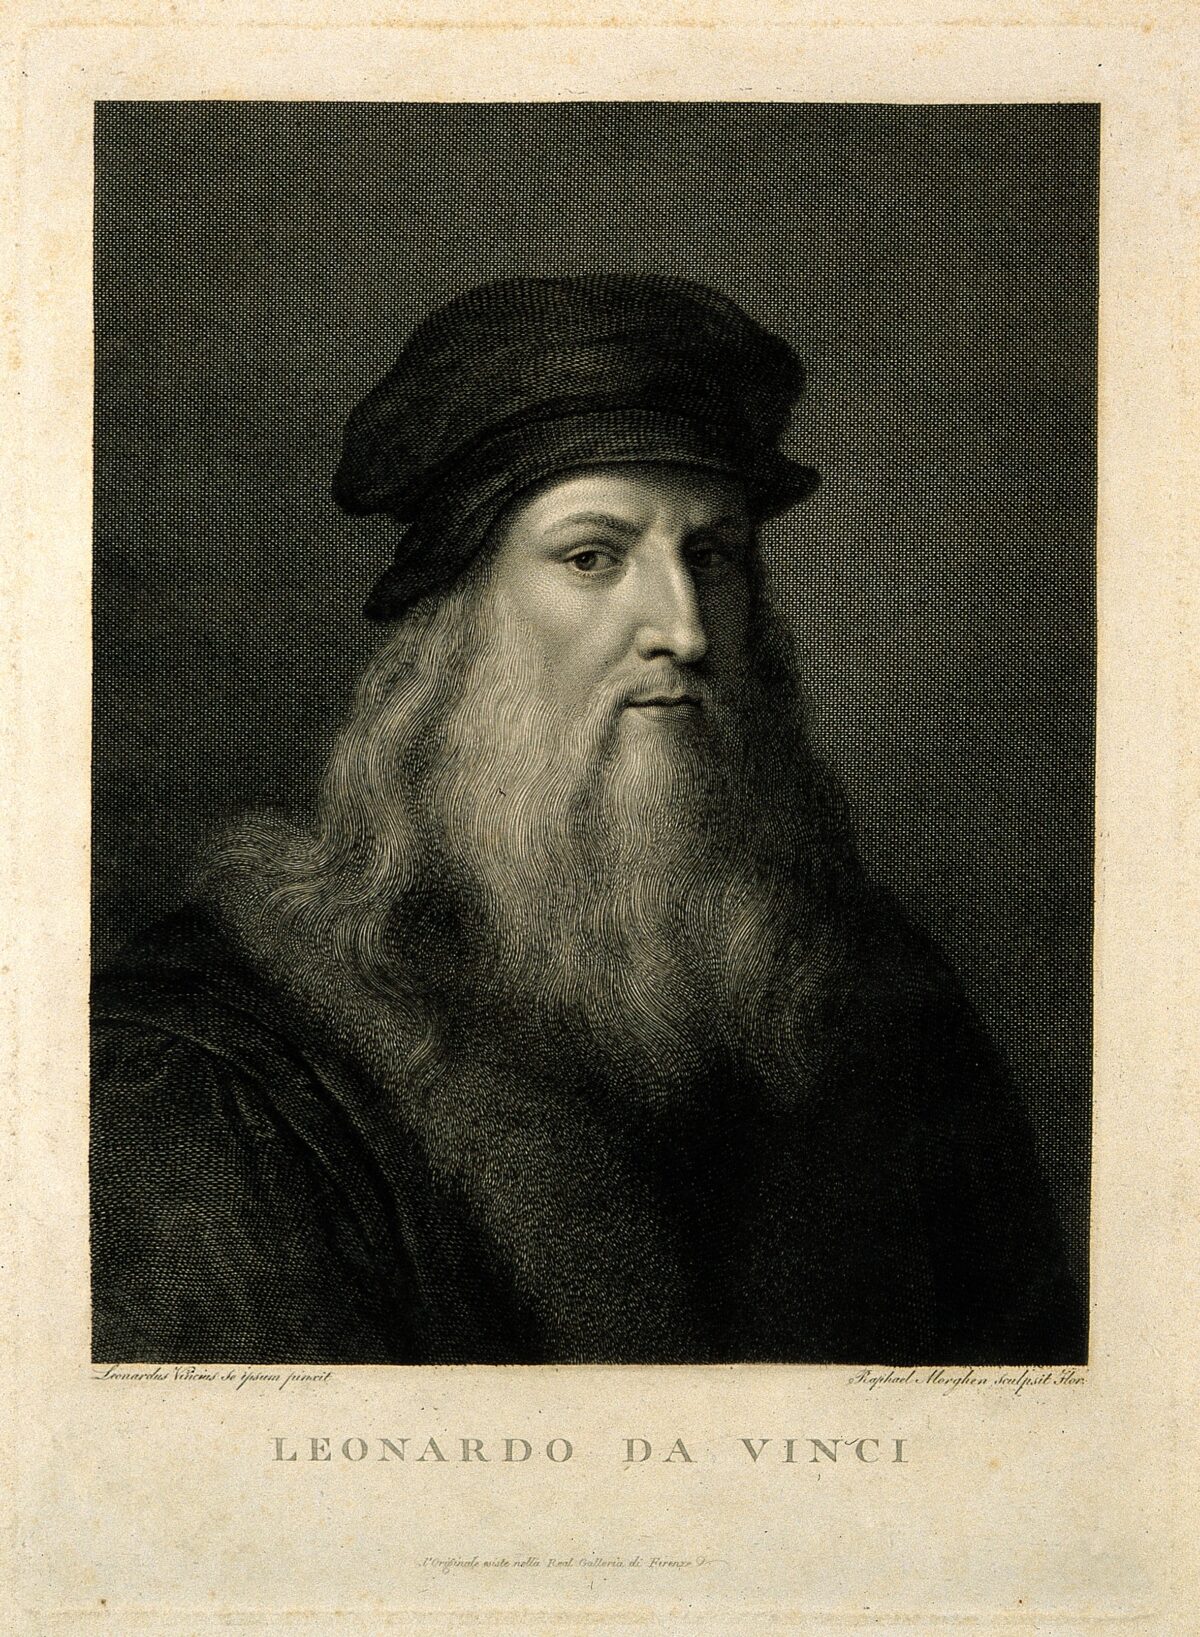 "Leonardo da Vinci" by Raffaello Morghen. Engraving. Cleveland Museum of Art. (Public Domain)